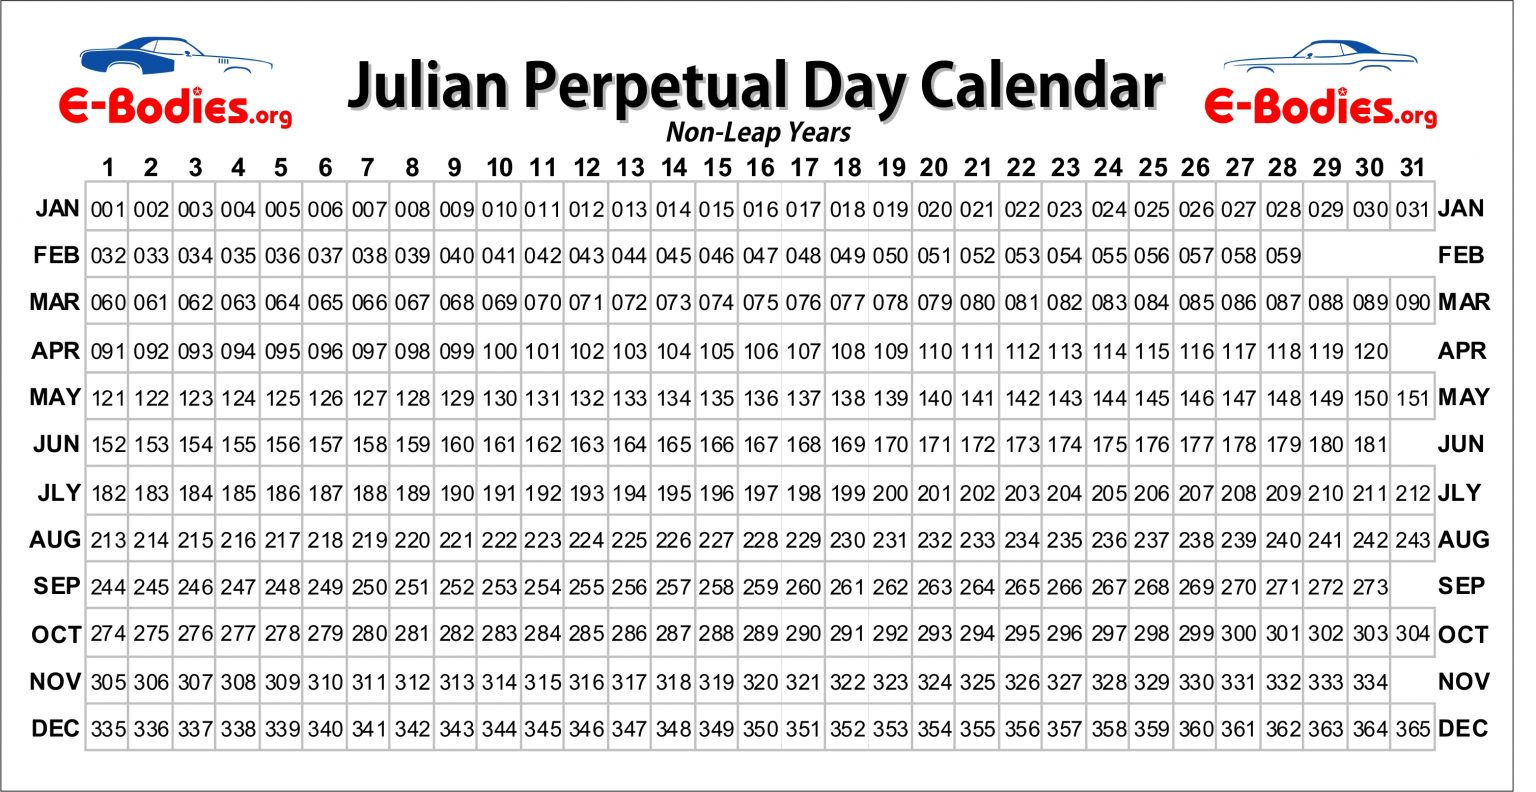 mopar julian perpetual day calendar e bodies – Calendar Template 2021